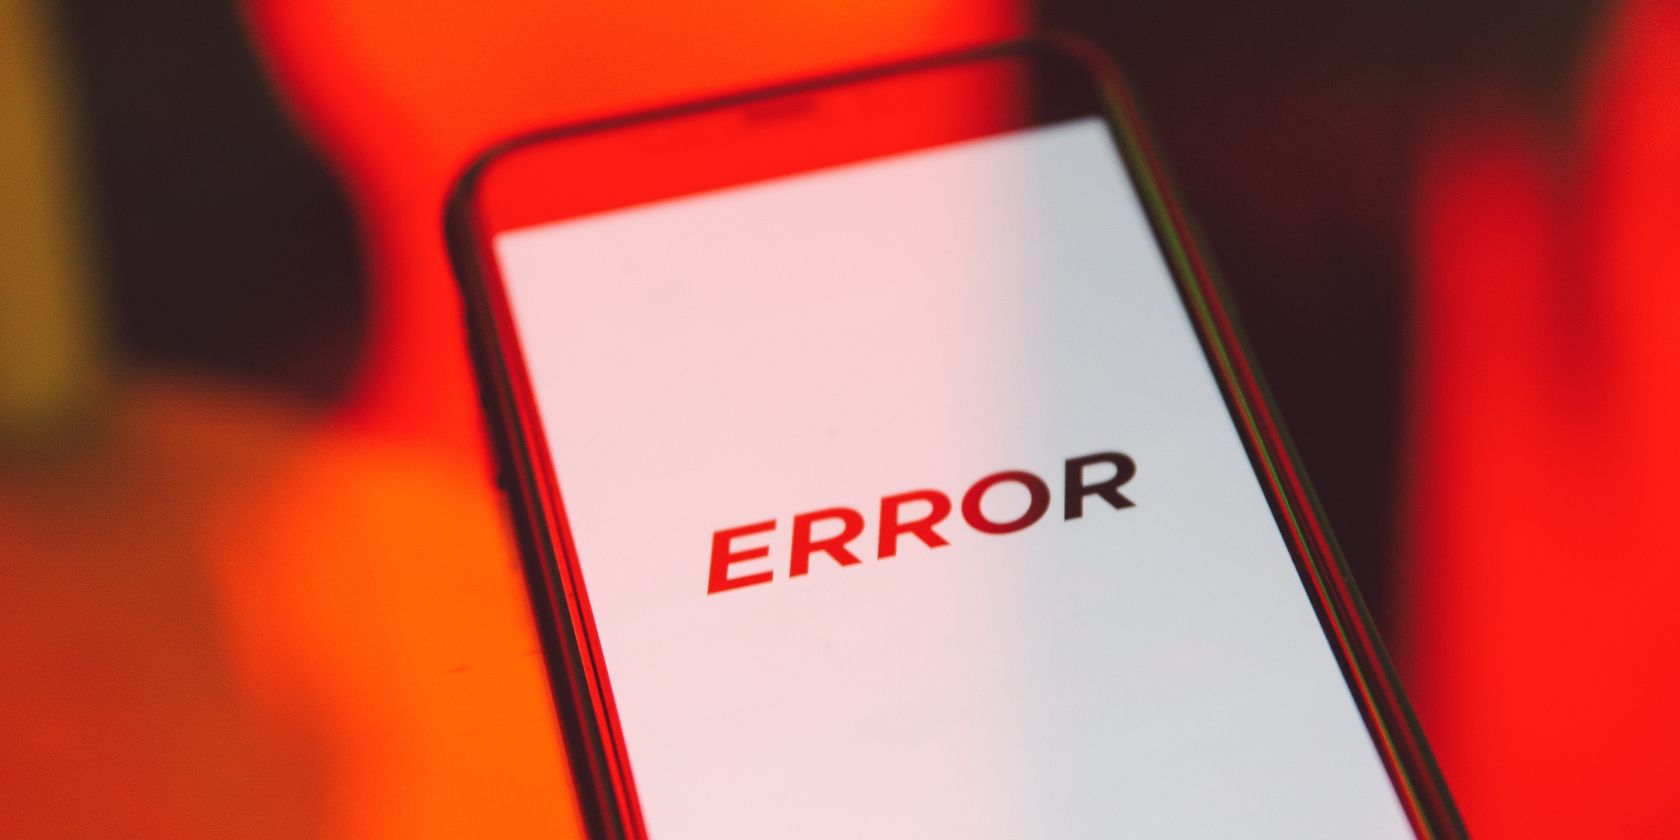 Error message on phone